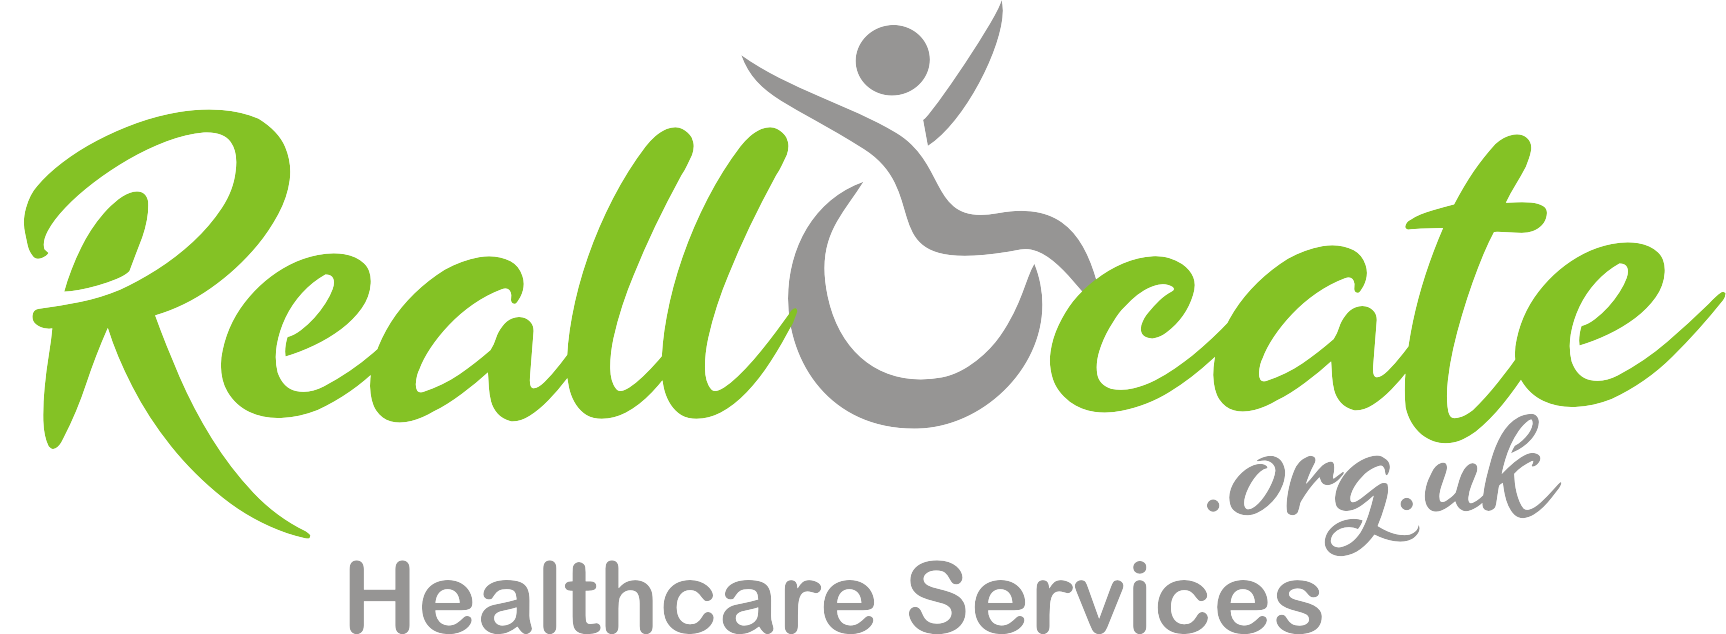 Reallocate Healthcare Services Mobility & Rehabilitation